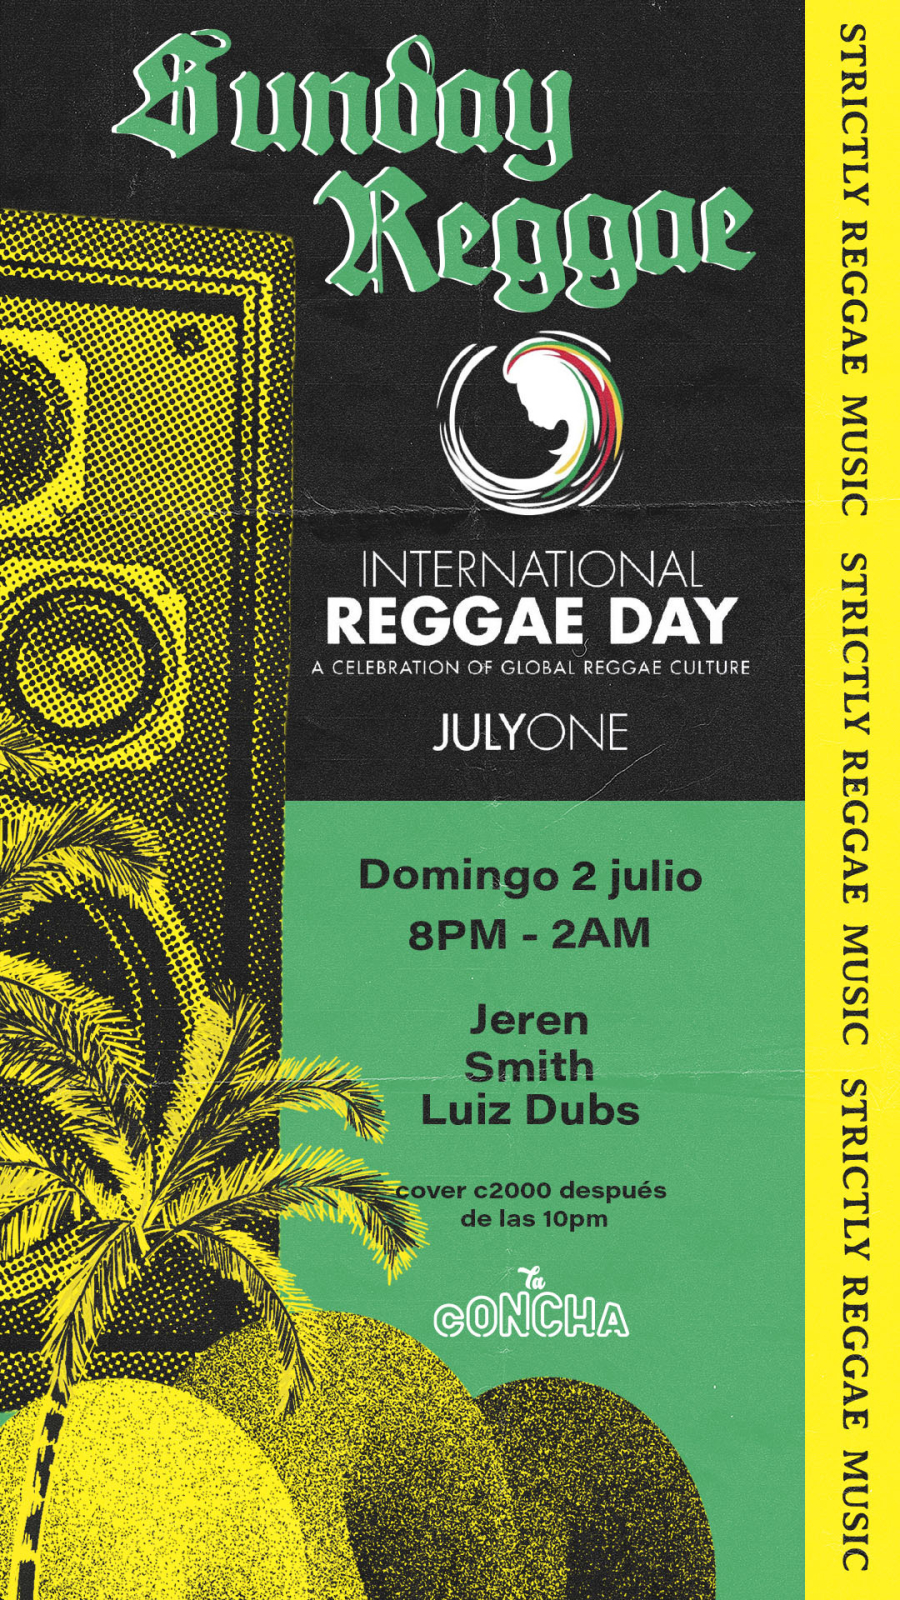 Sunday Reggae: International Reggae Day